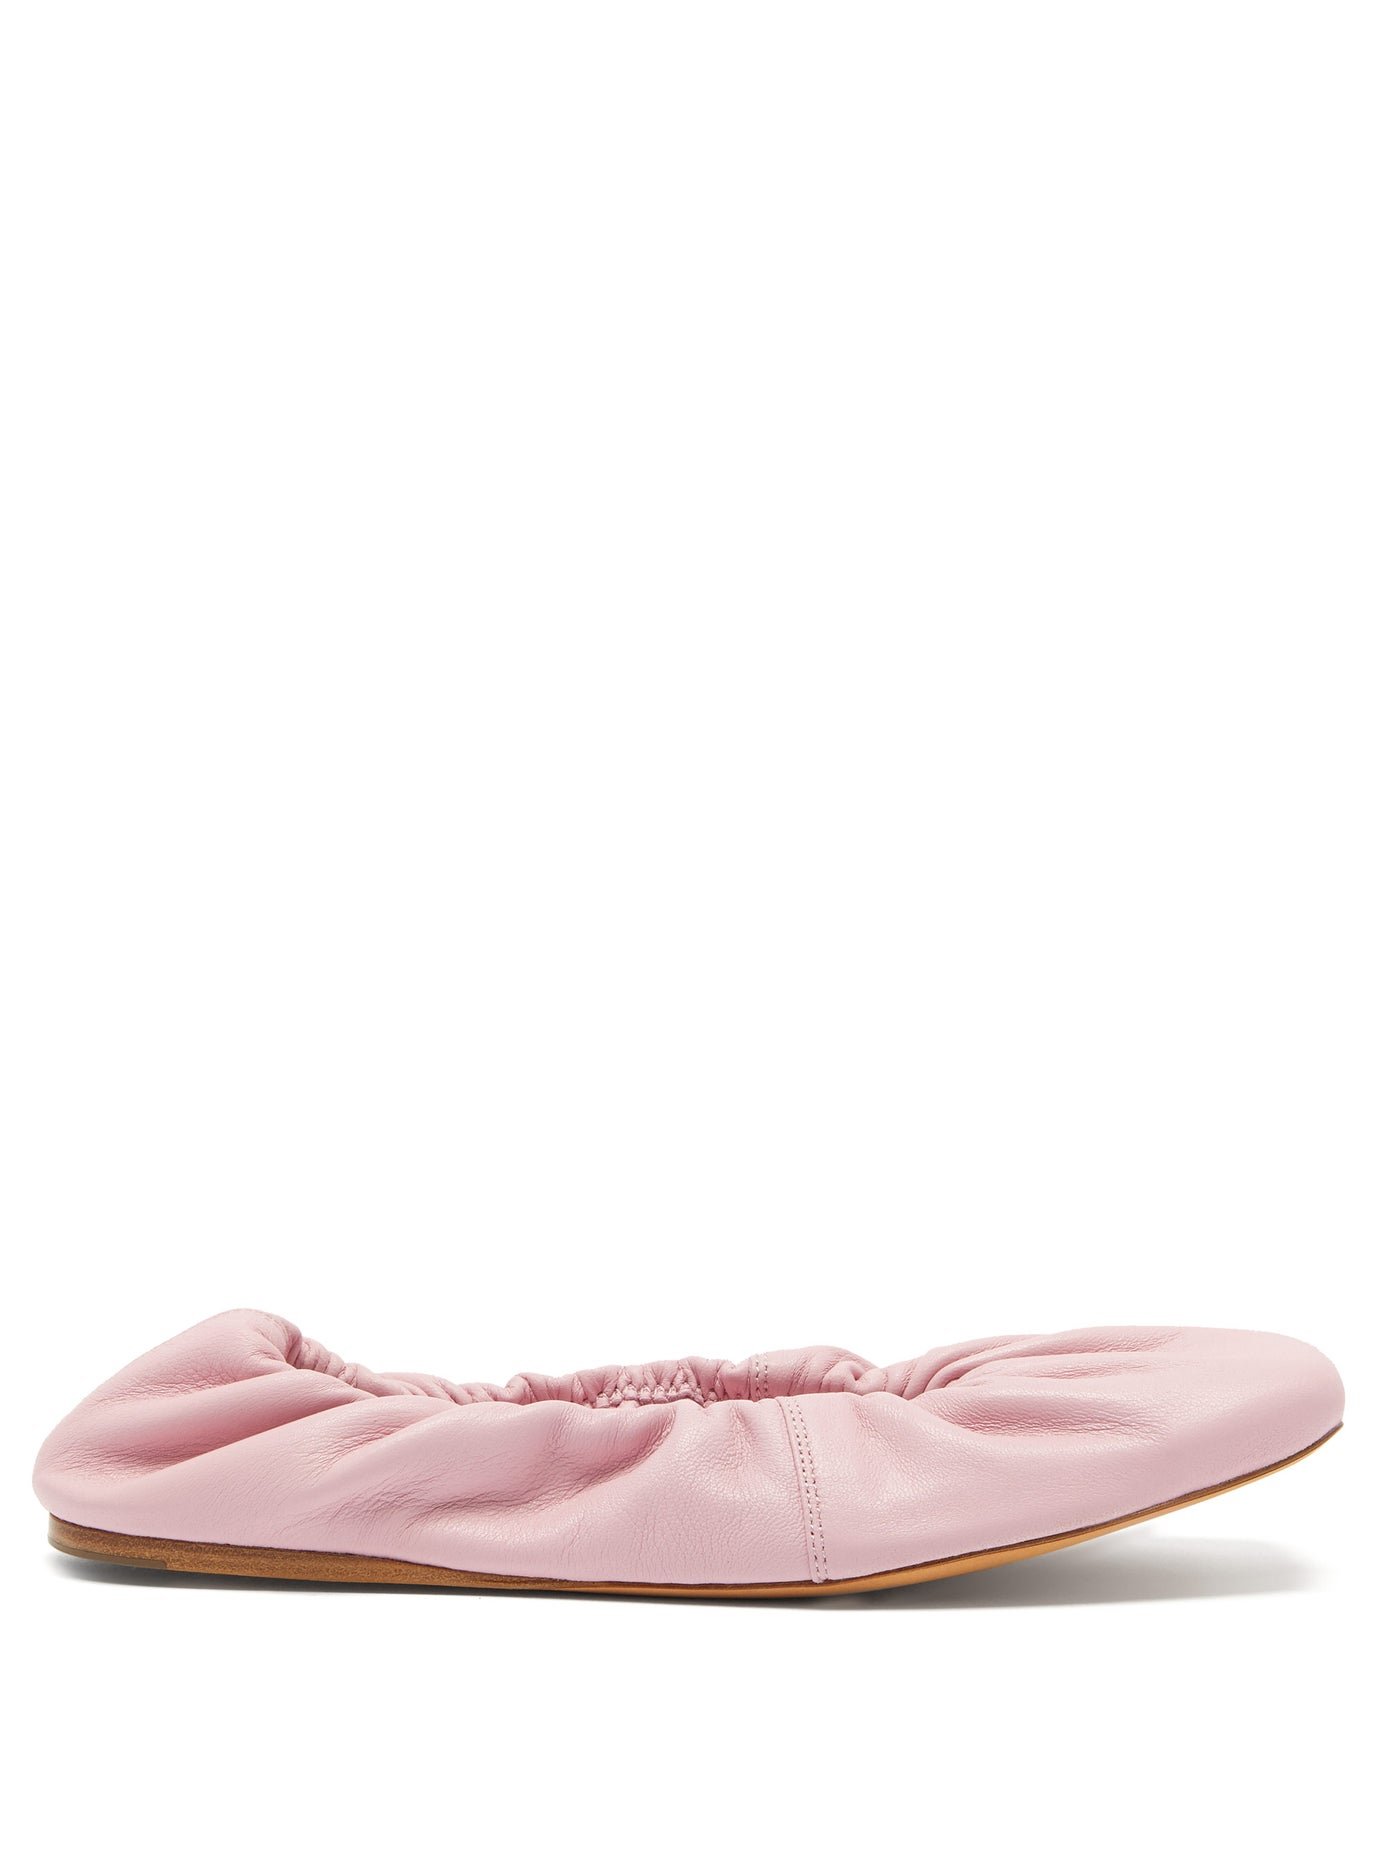 SOULIERS MARTINEZ Montjuic Leather Ballet Flats - Pink